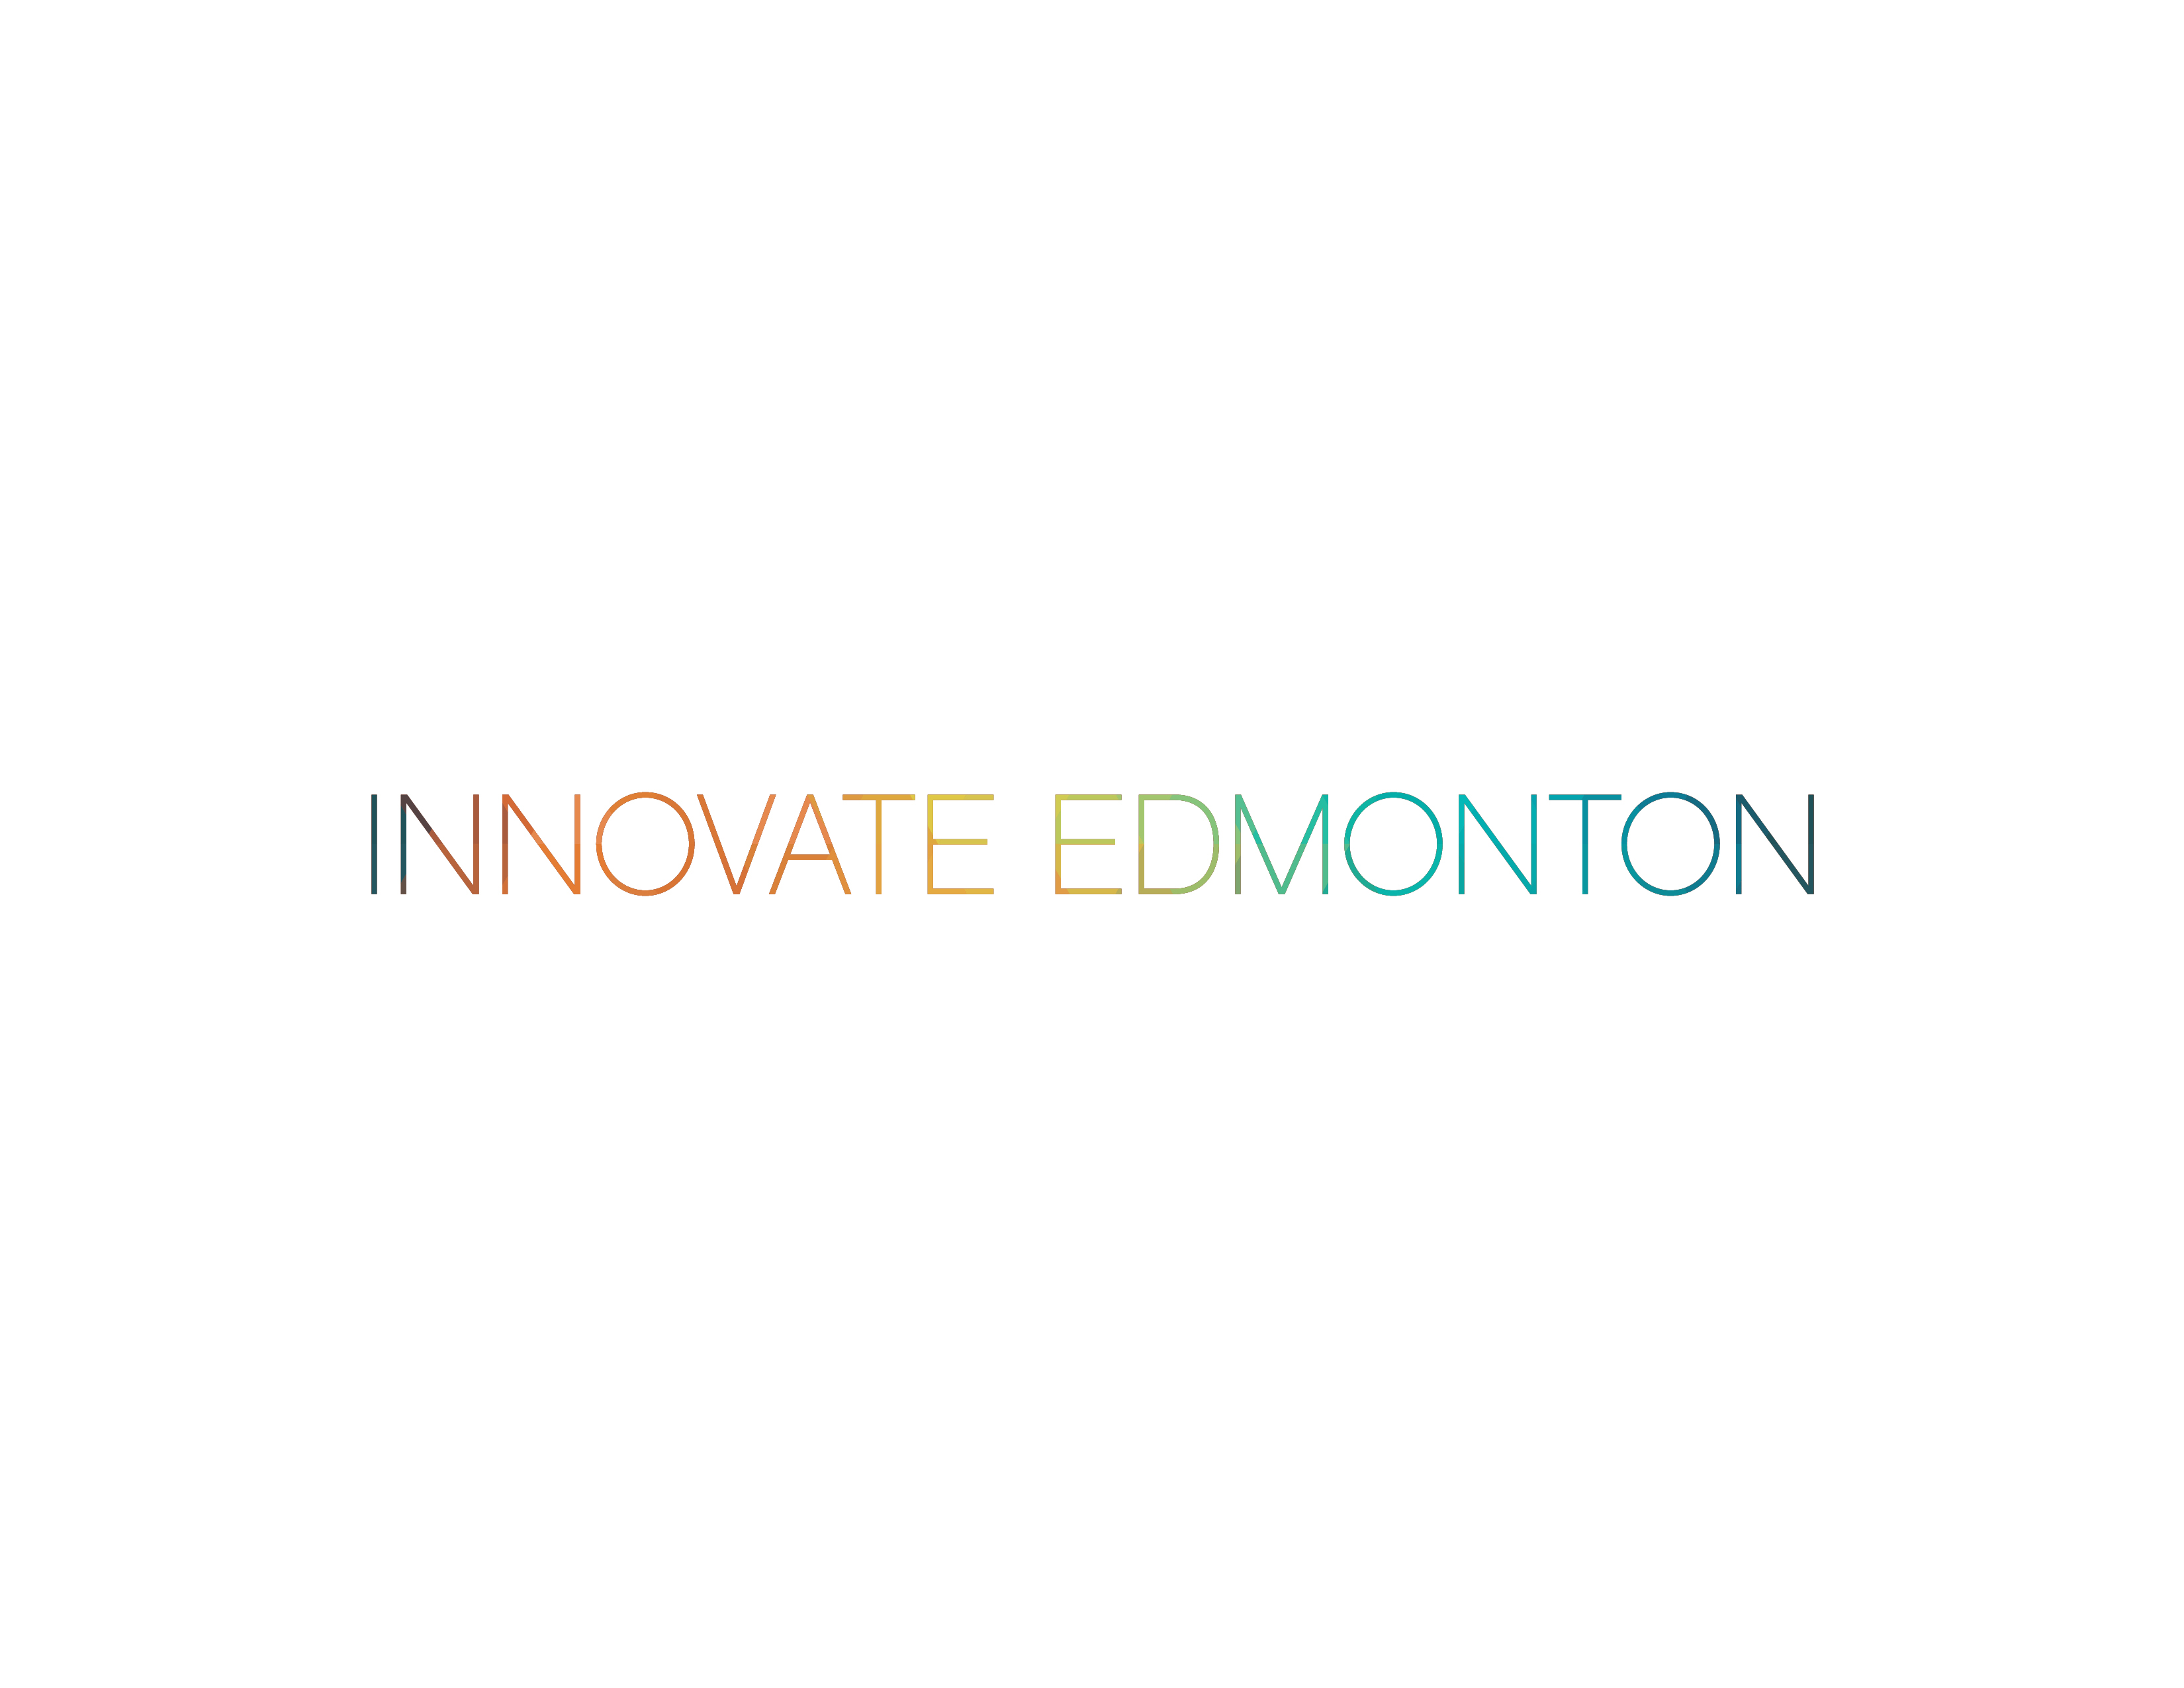 Edmonton’s Innovatio